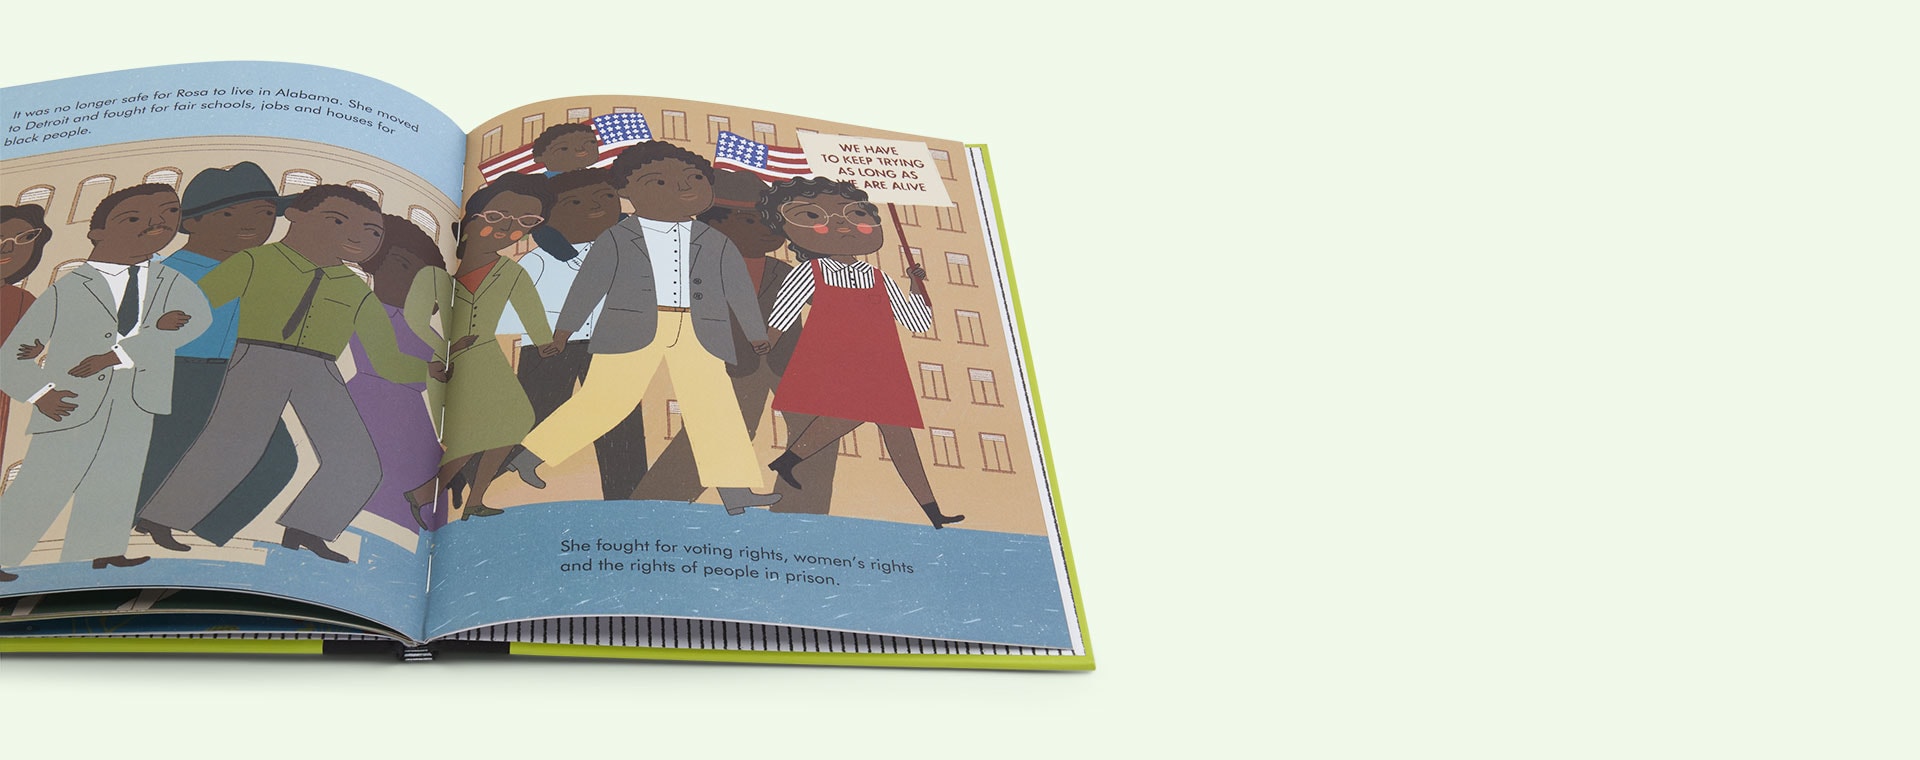 Multi bookspeed Little People Big Dreams: Rosa Parks